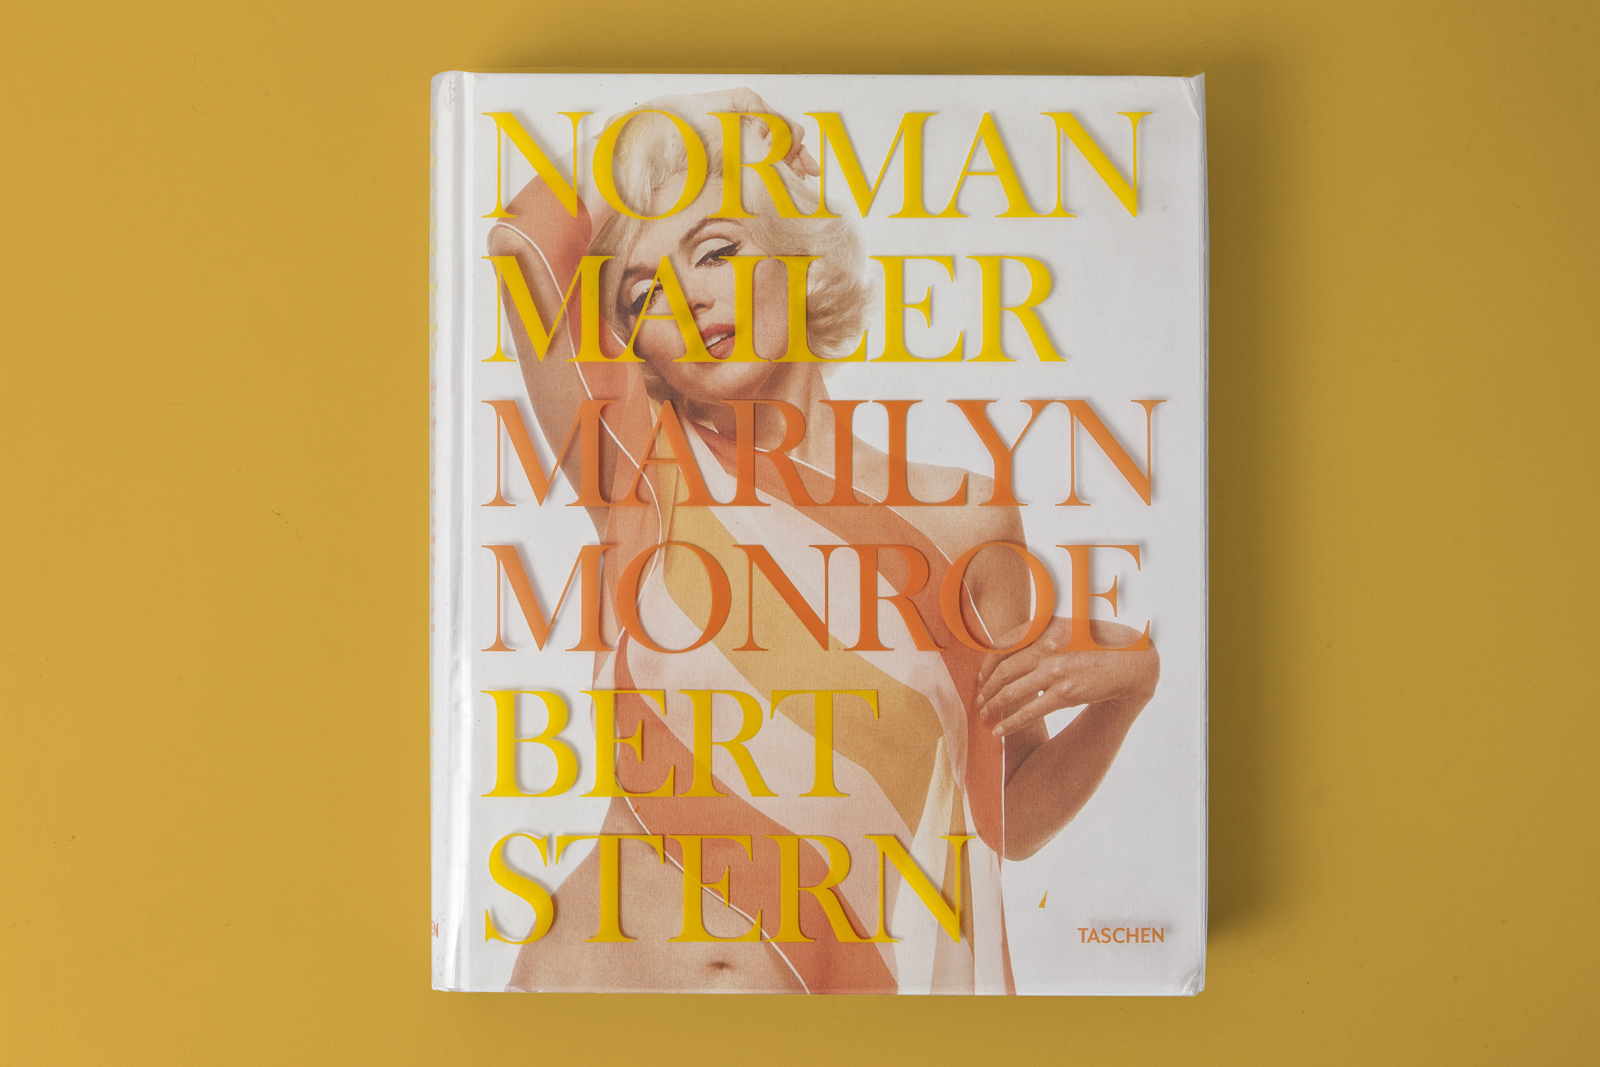 Marilyn Monroe by Norman Mailer - Bert Stern 01